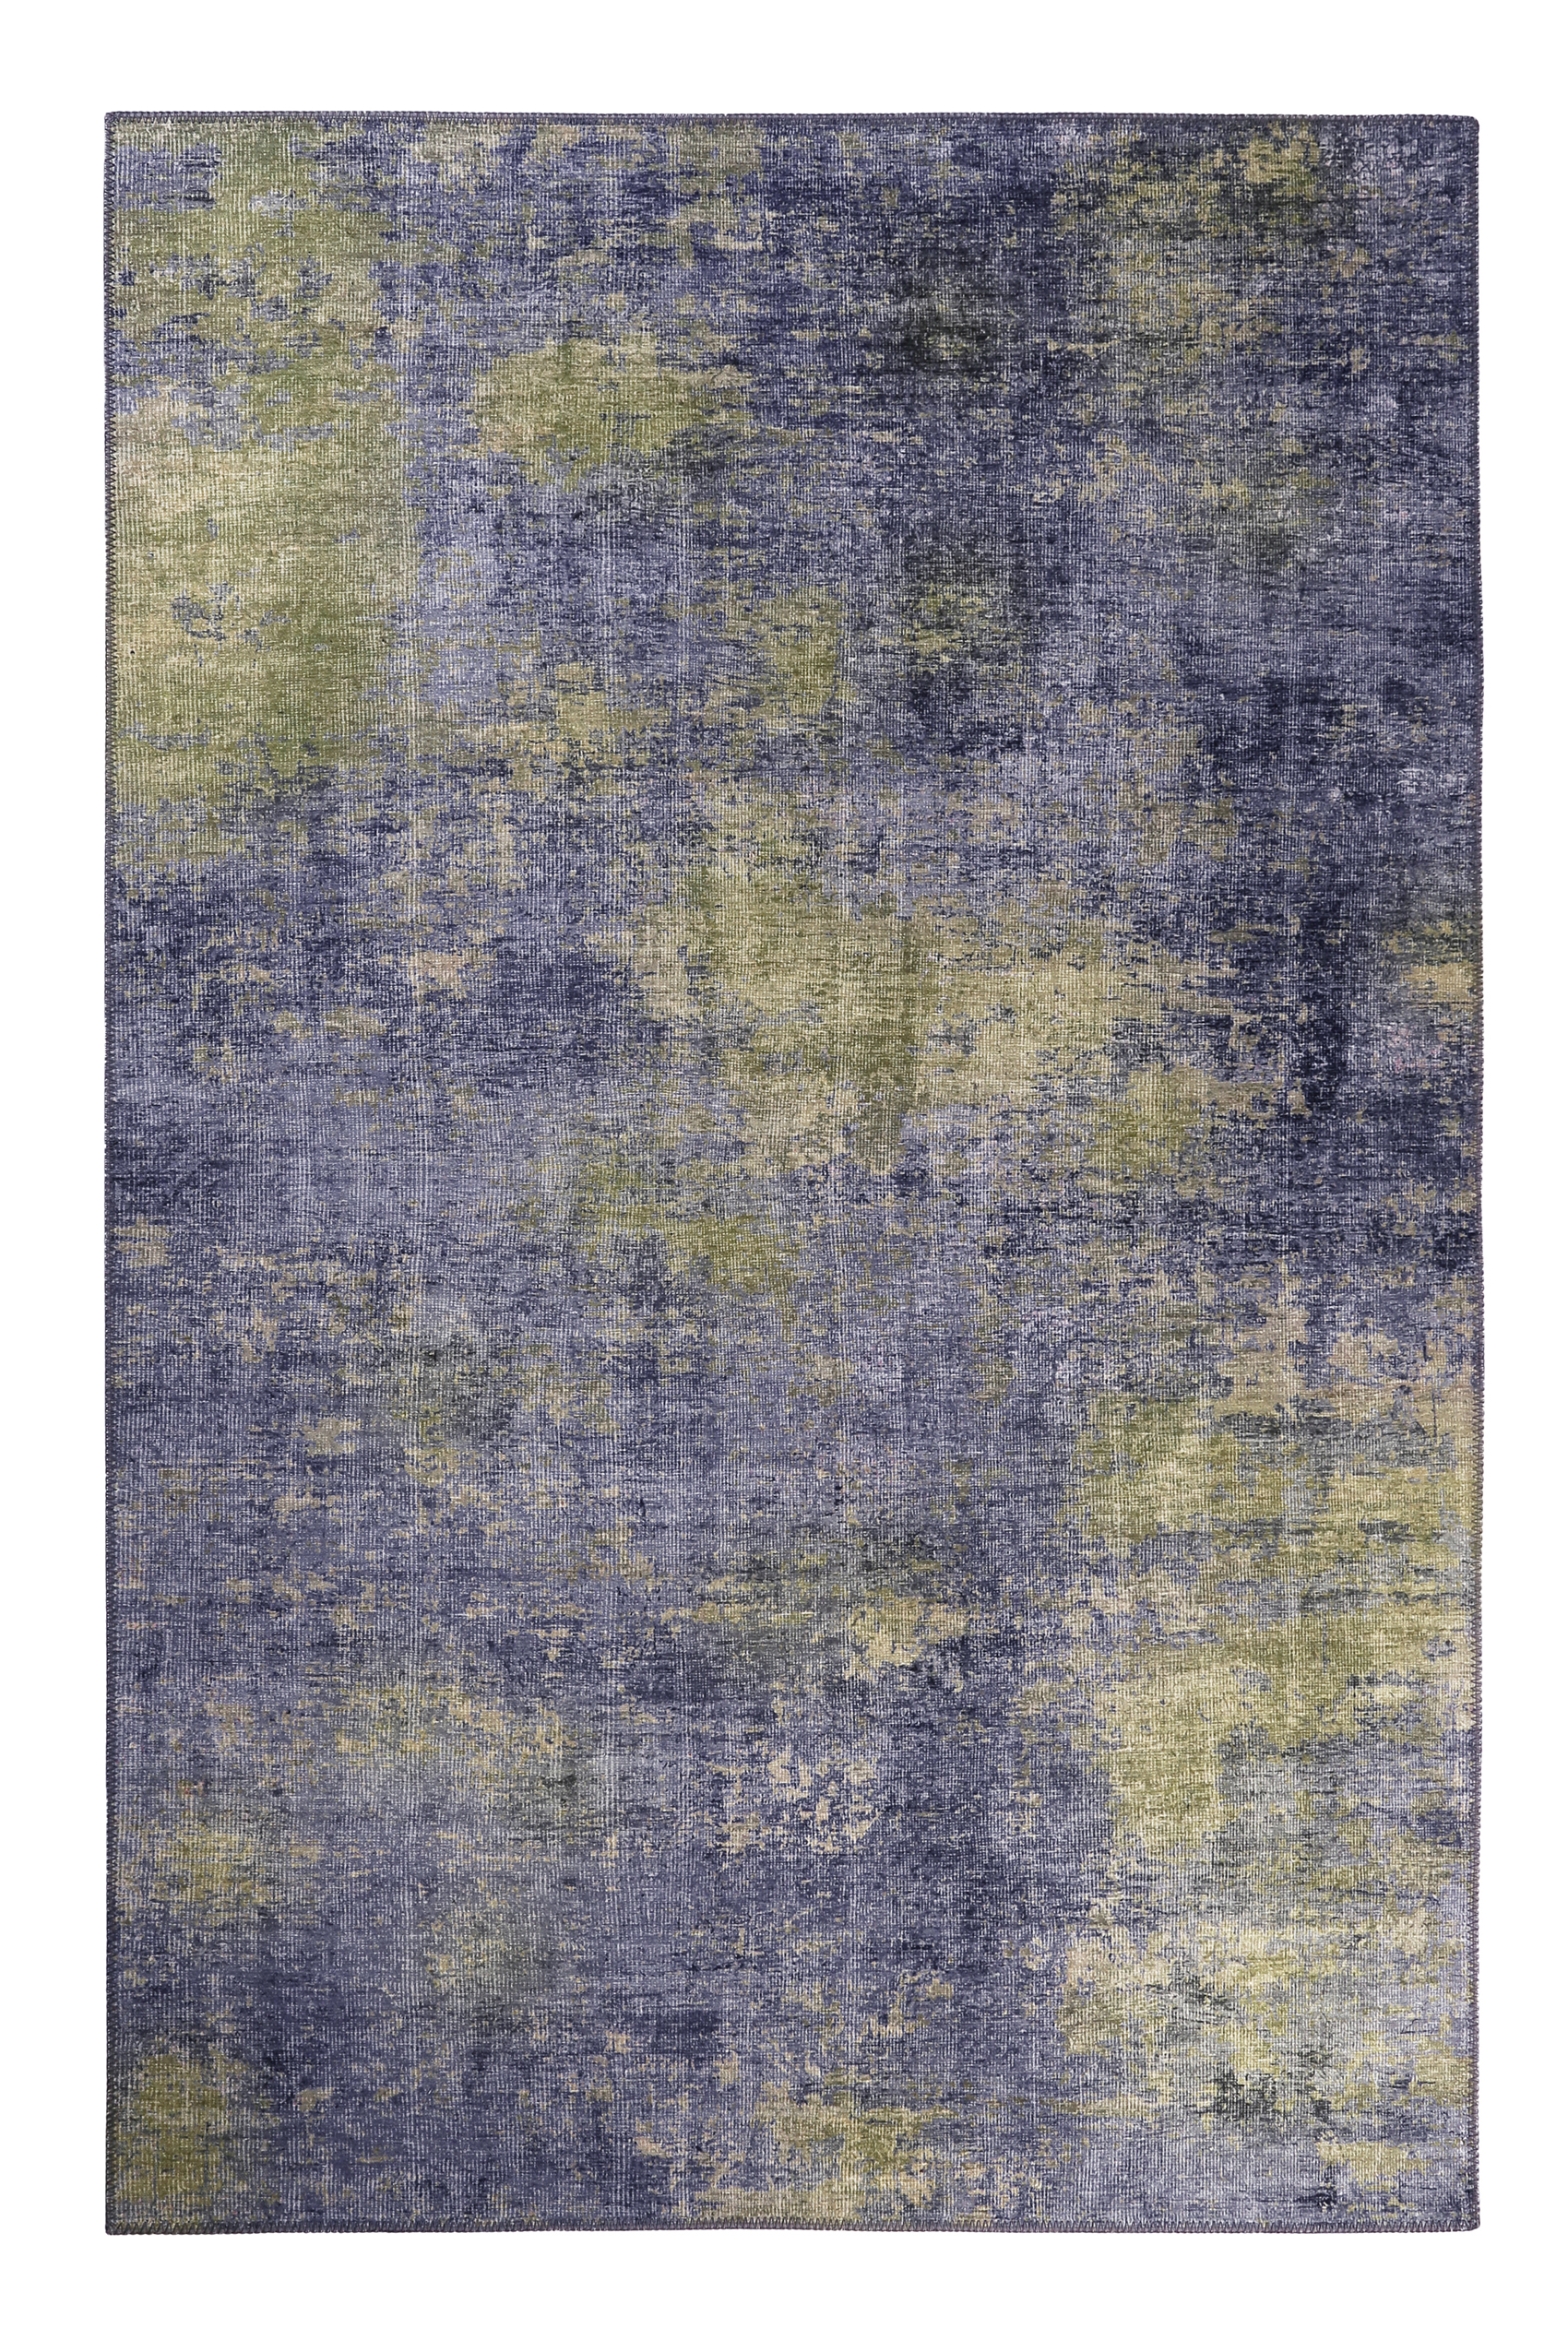 Tapis rayé vintage en polyester gris 120x170